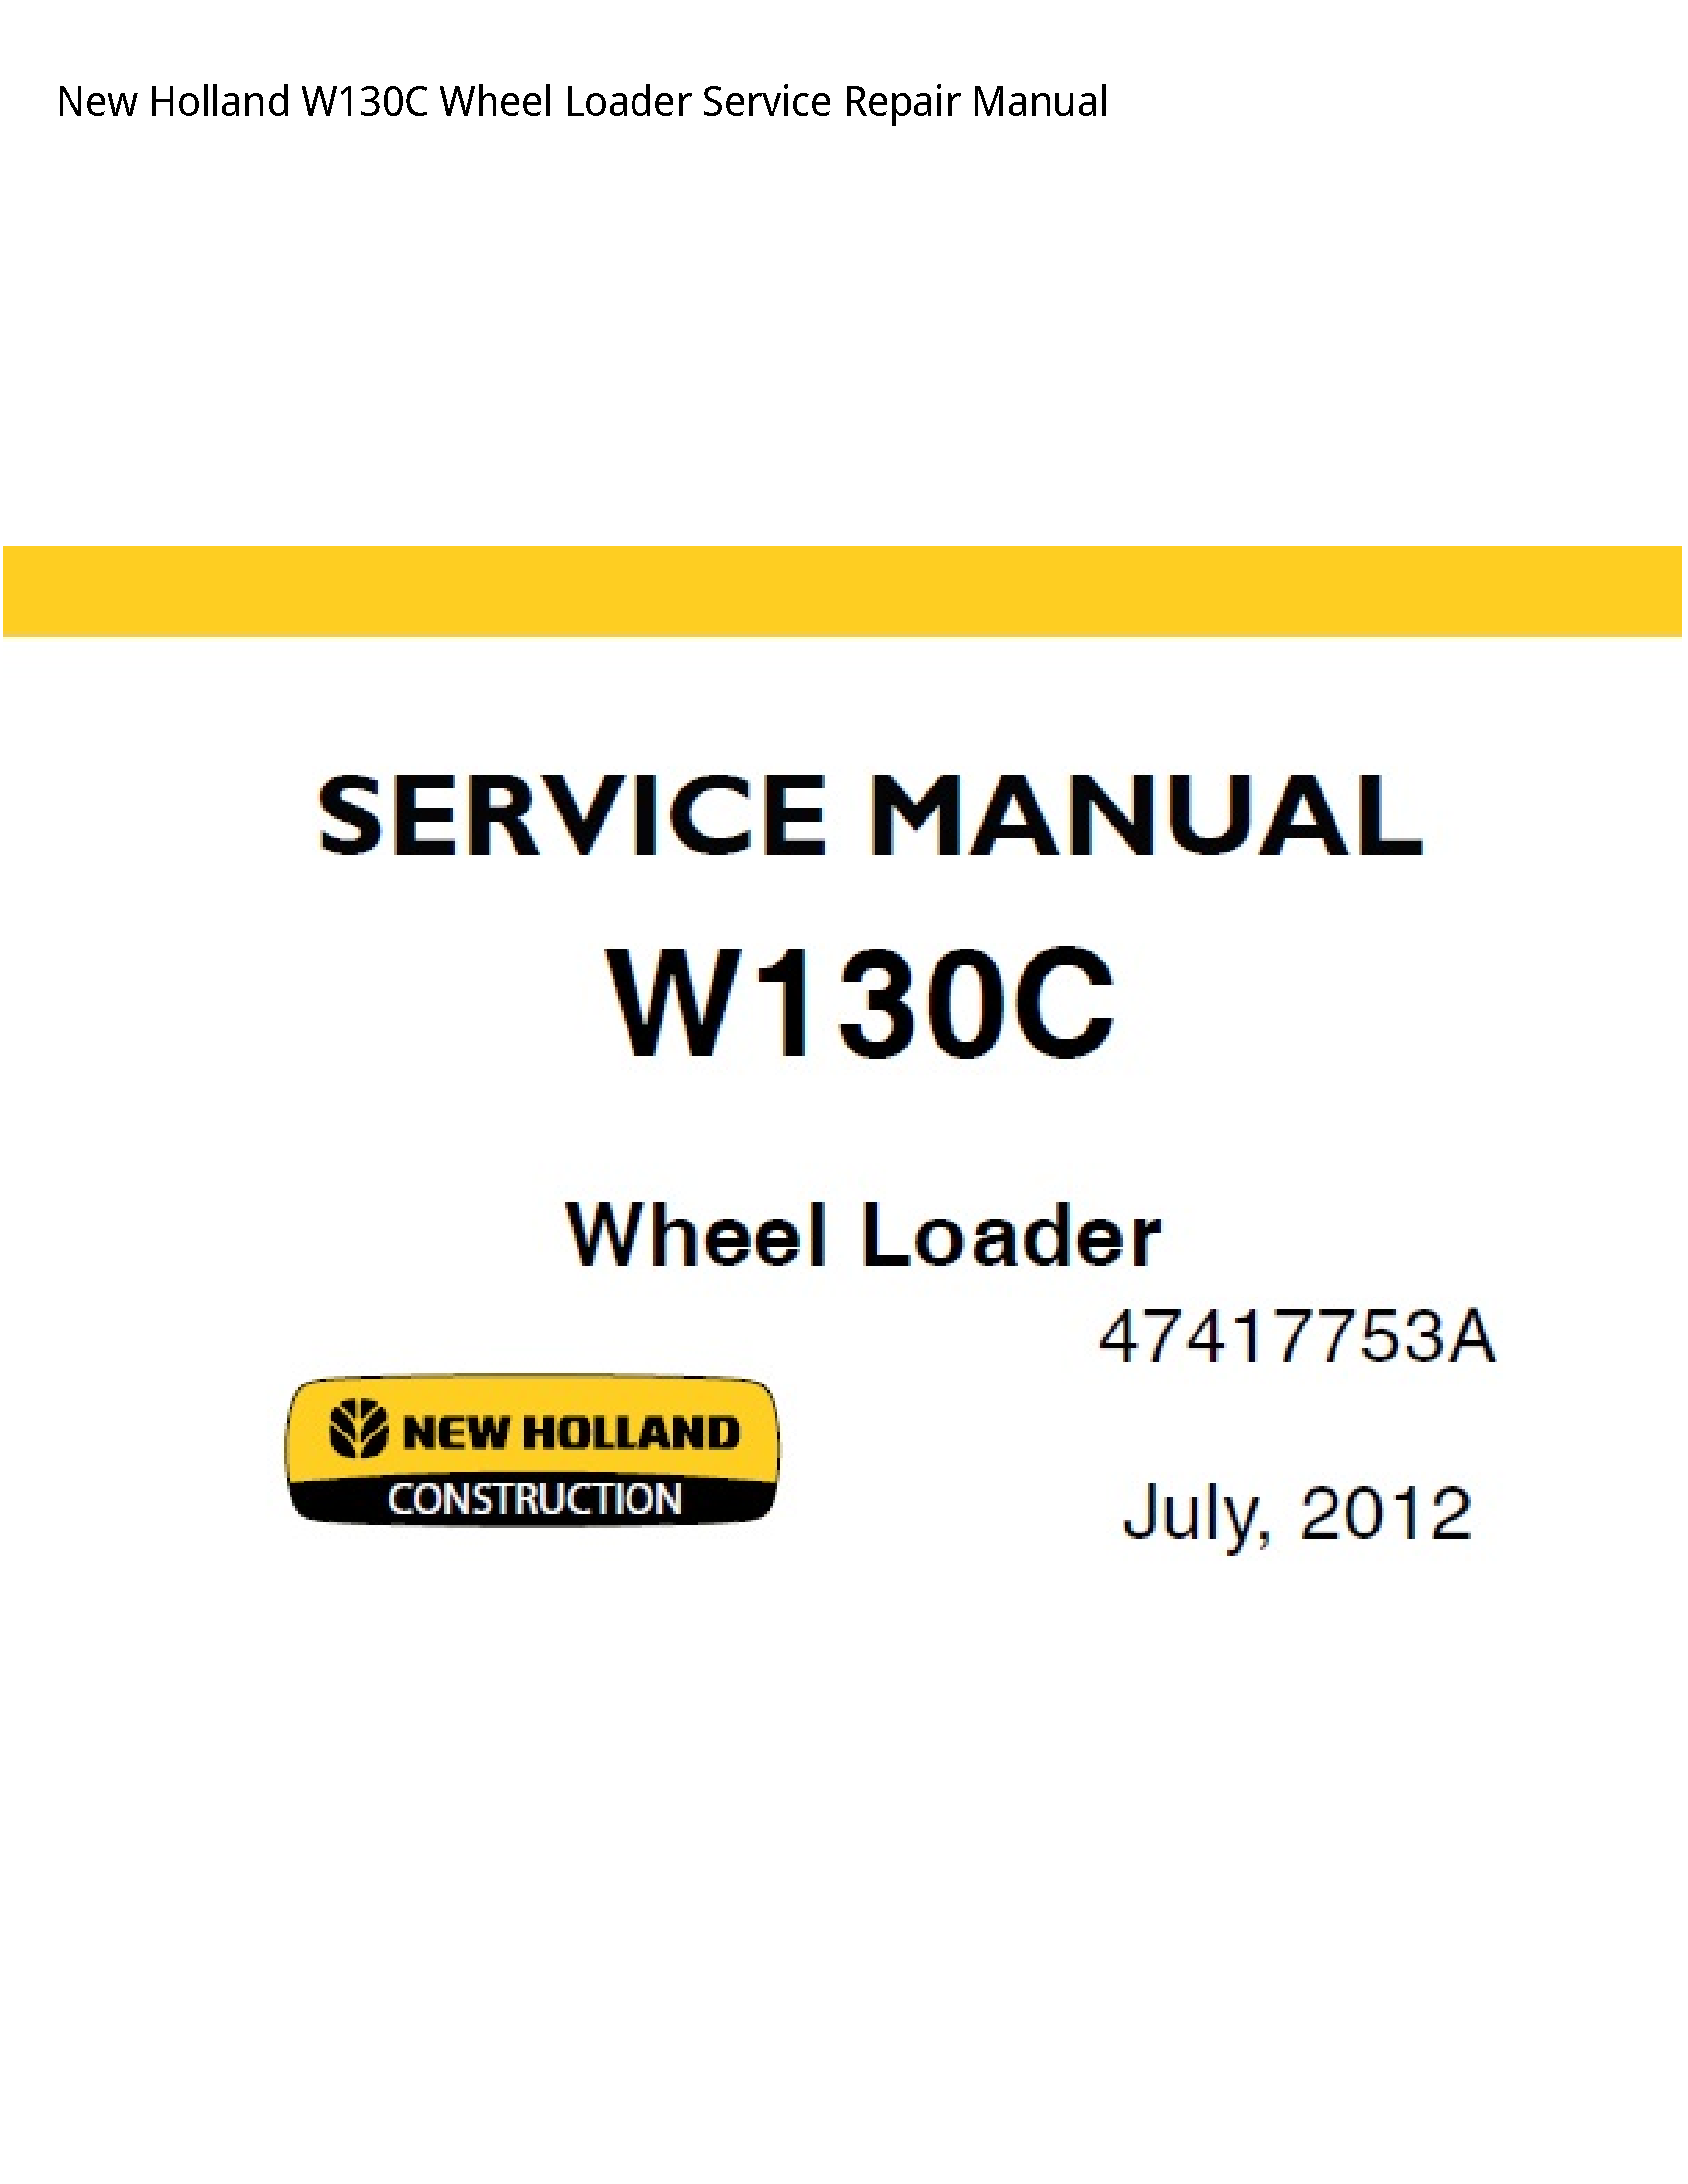 New Holland W130C Wheel Loader manual